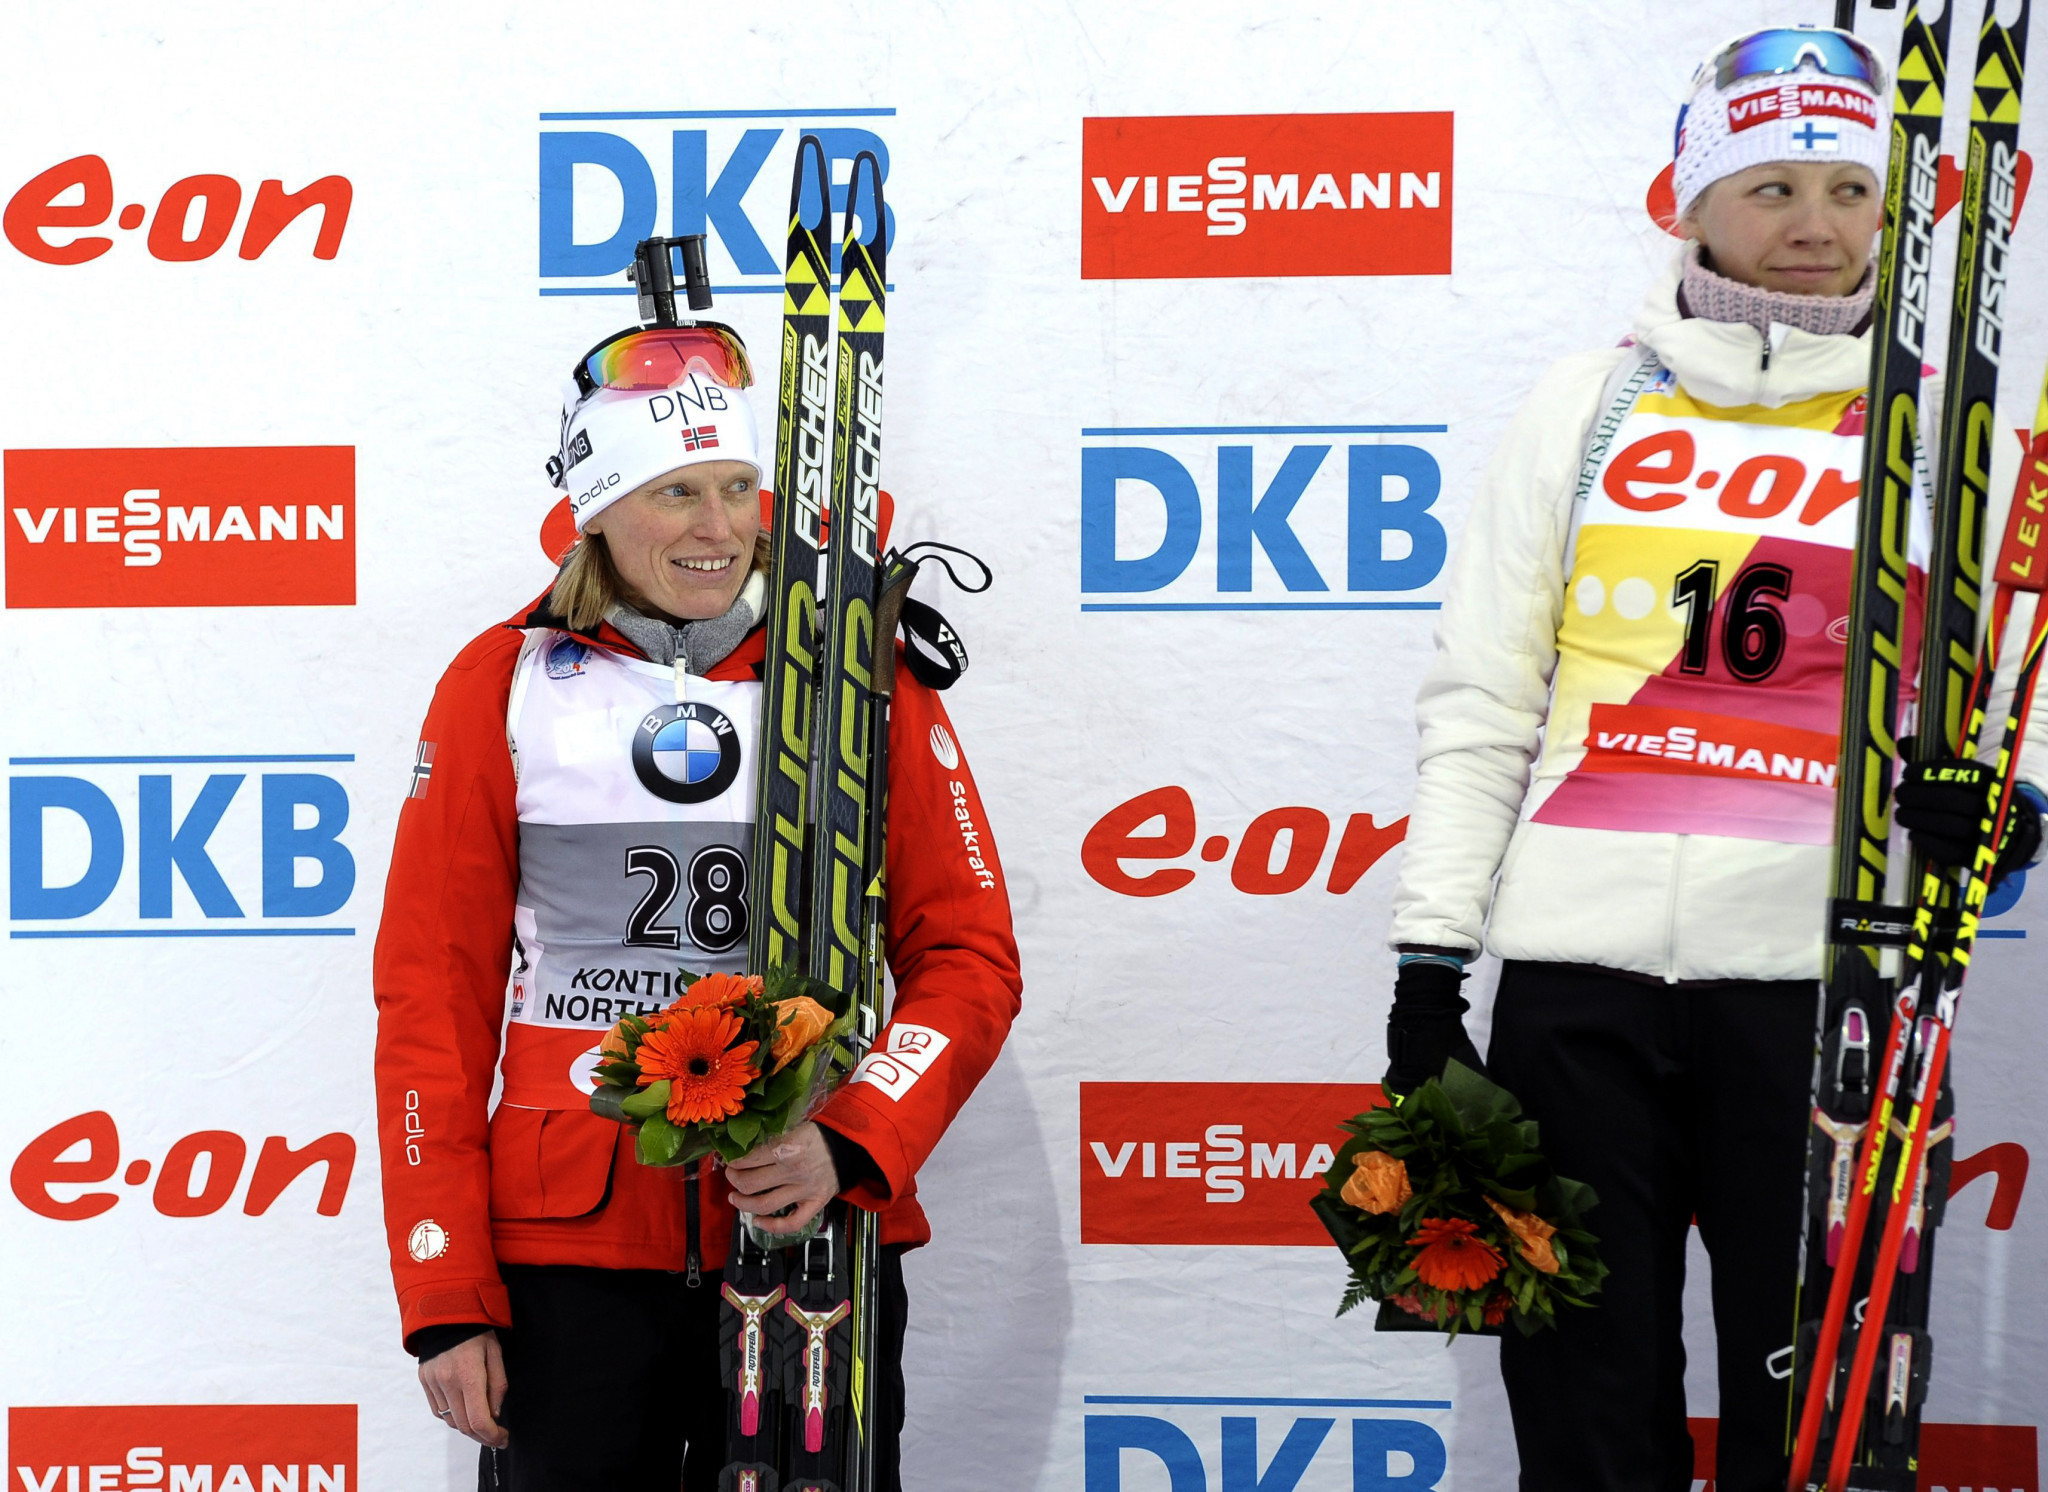 Berger and Mäkäräinen both get 2013-2014 Biathlon World Cup crystal globes after doping ban changed points total